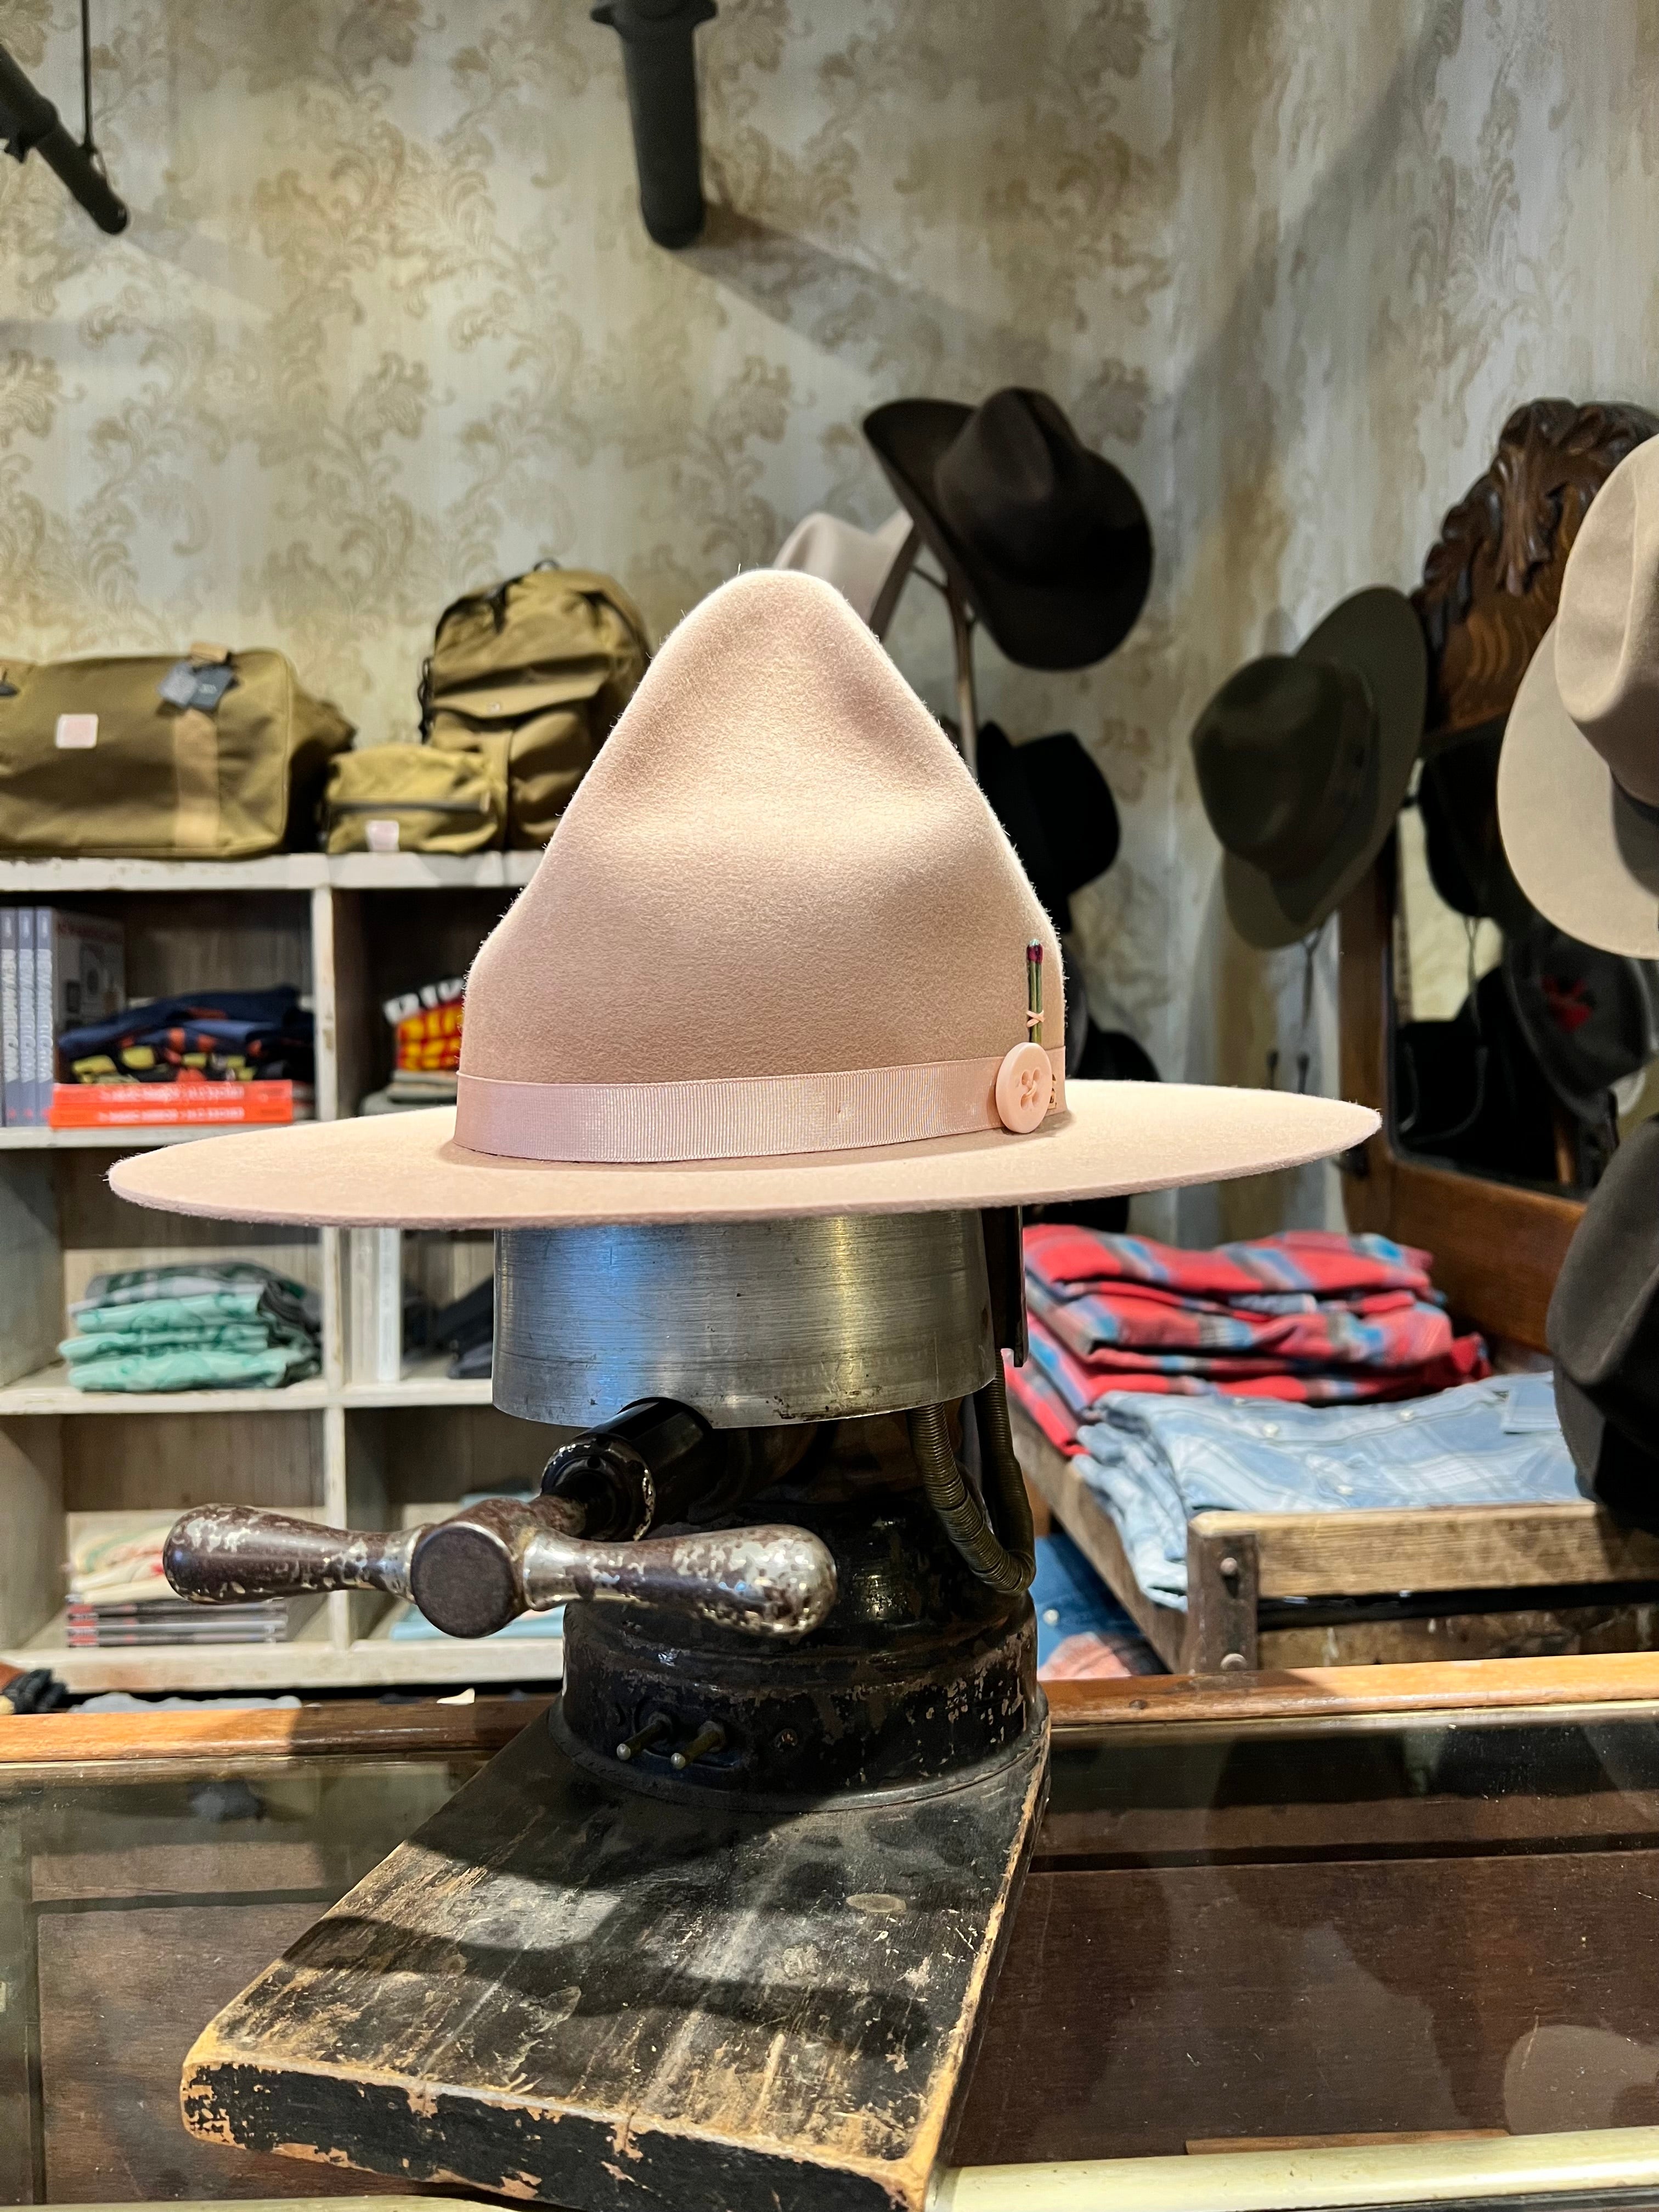 Open Road 6X Cowboy Hat